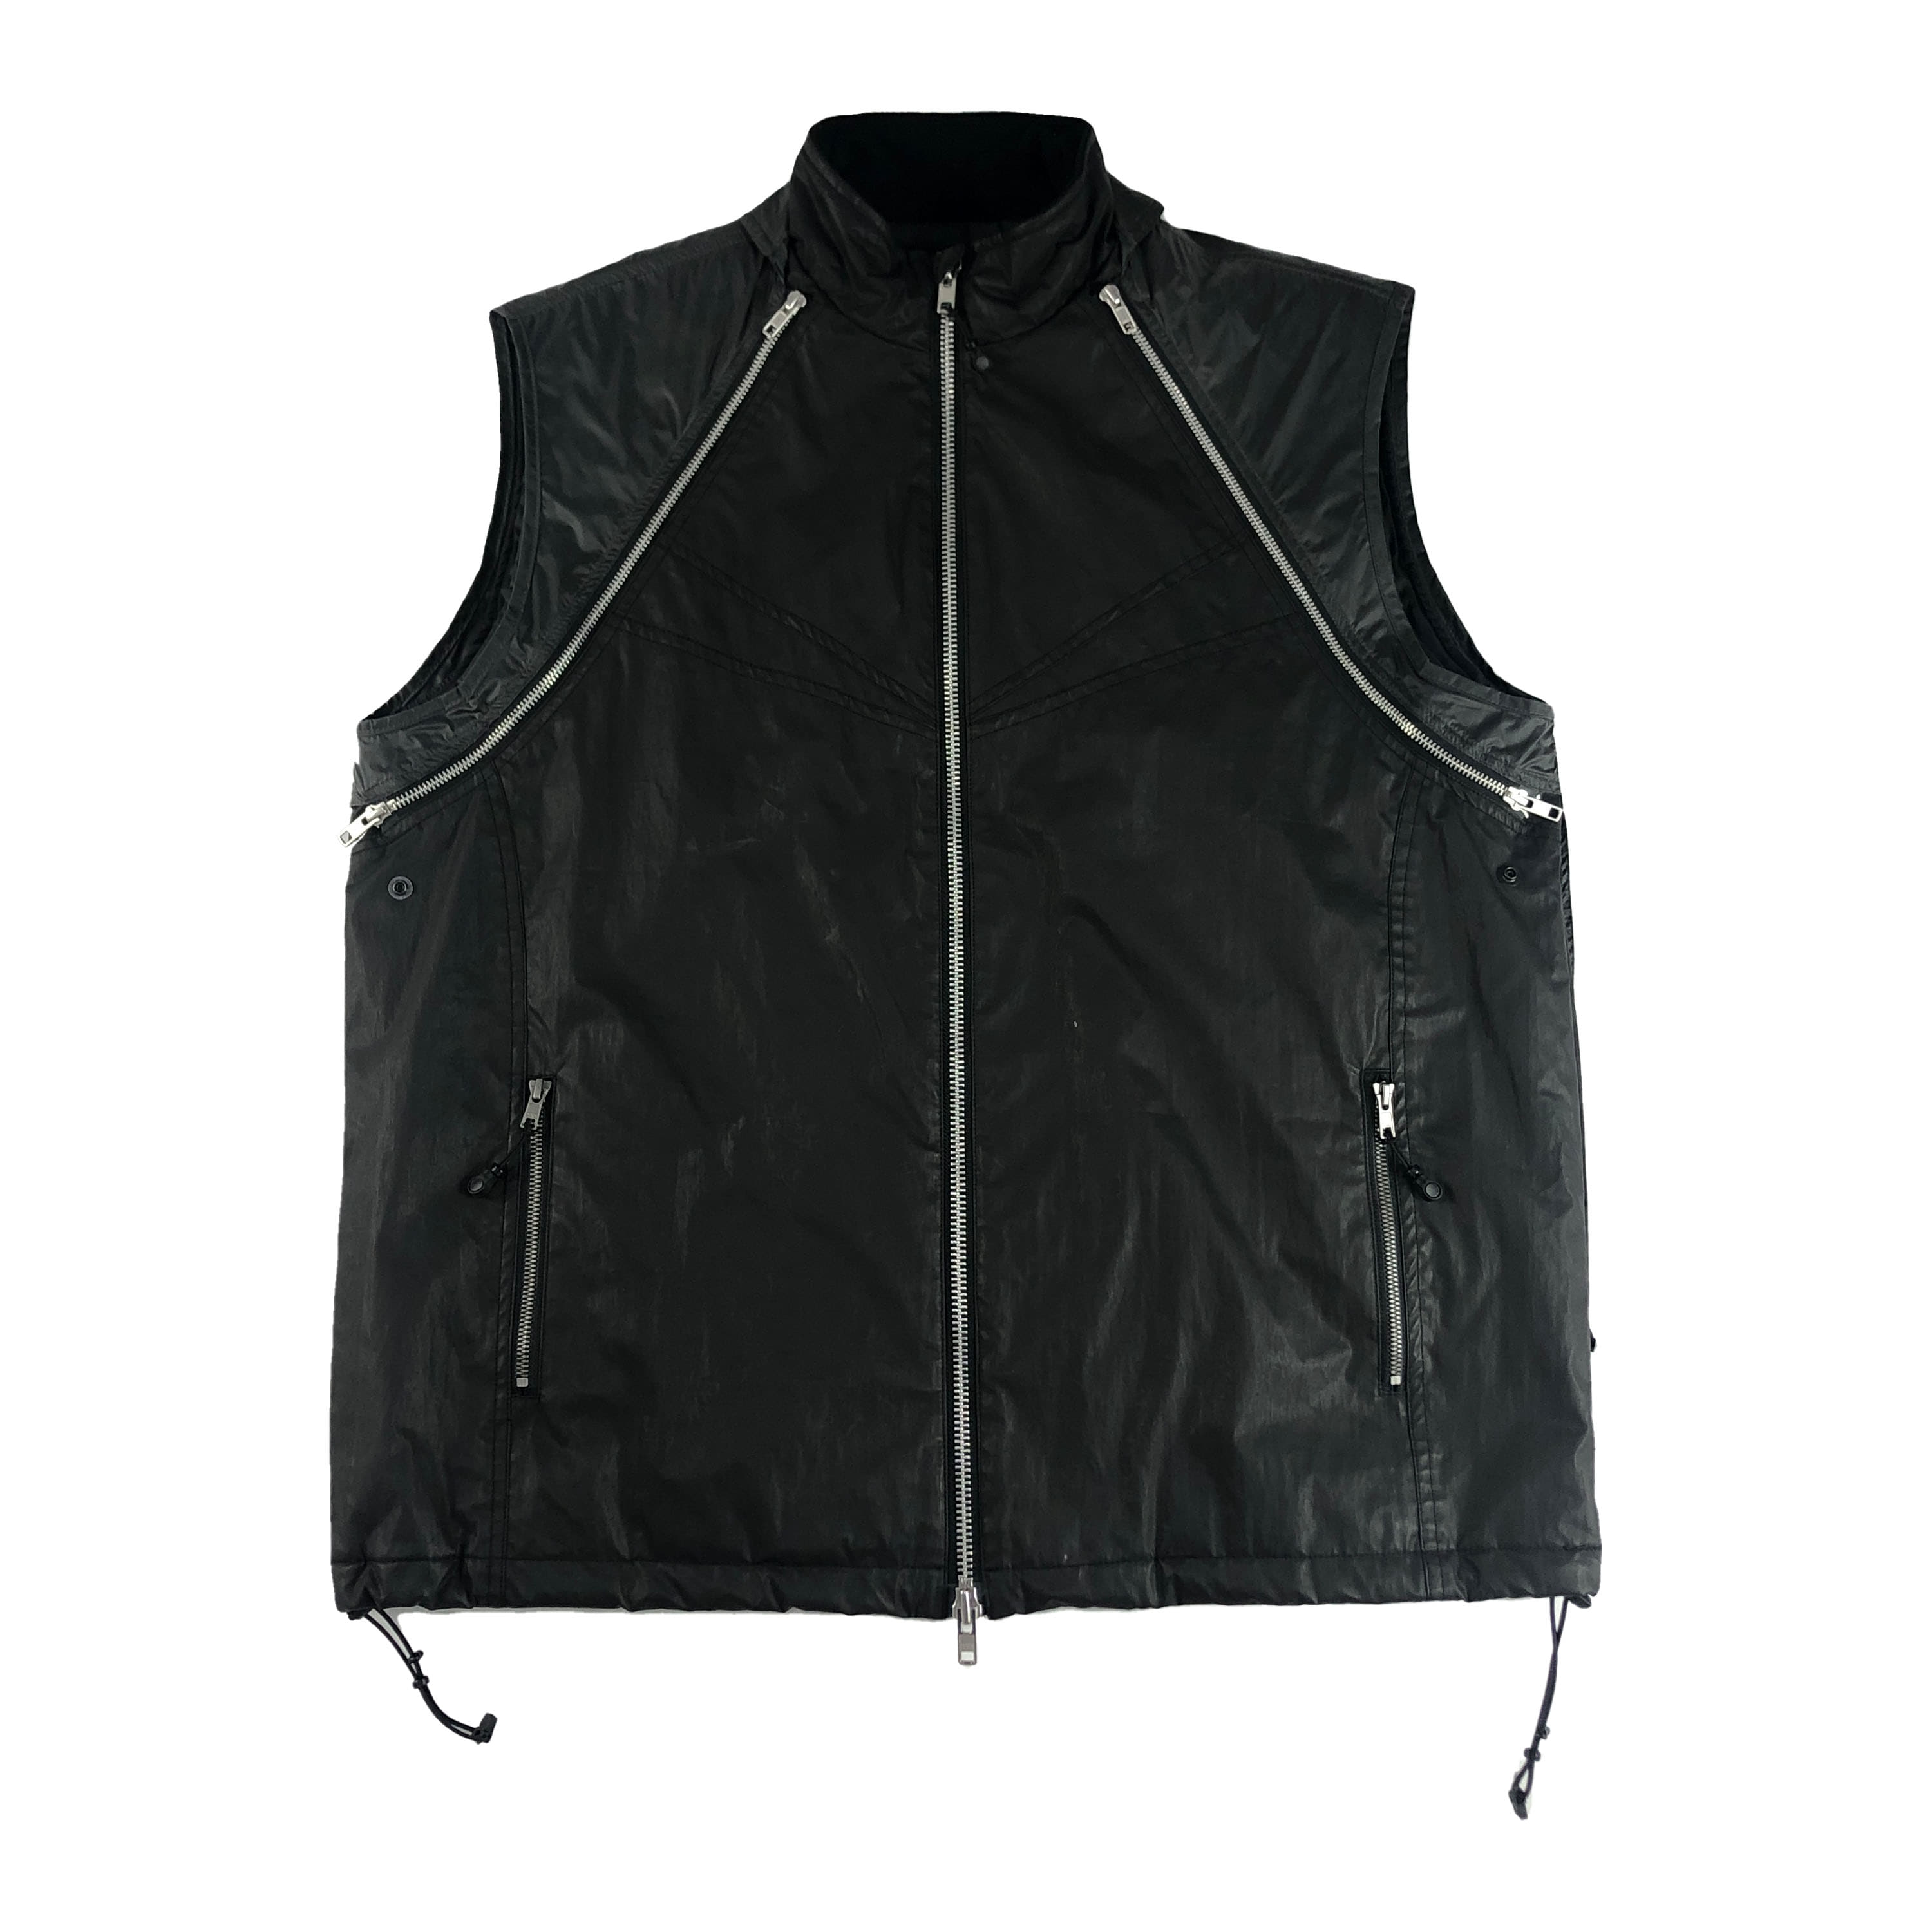 [Black Merle] Zipup Vest - Free Size